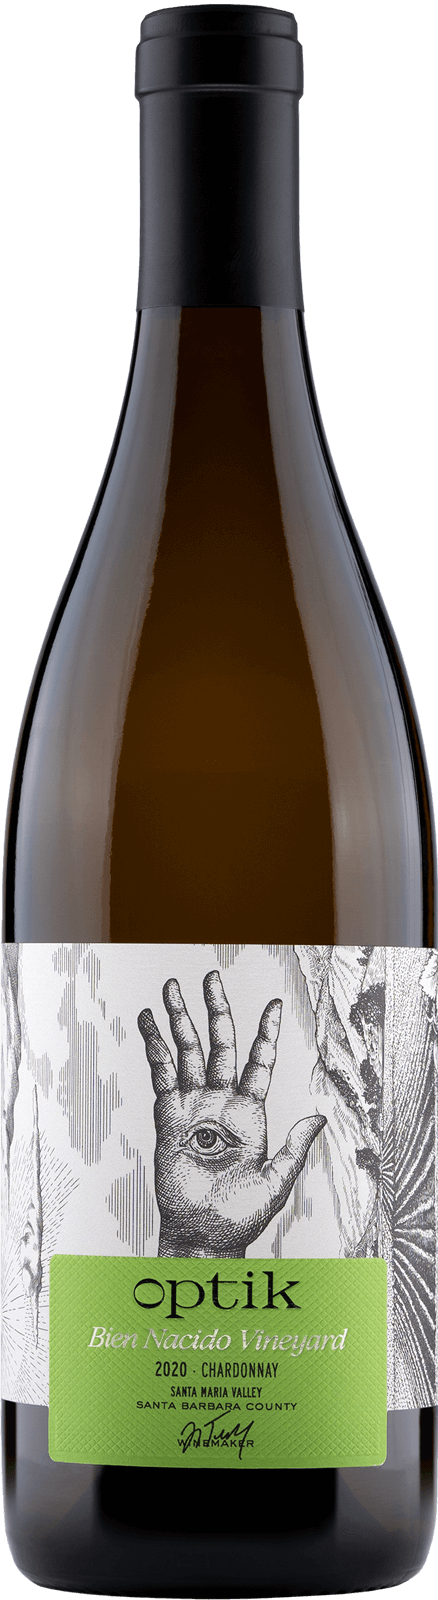 2020 Chardonnay - Bien Nacido